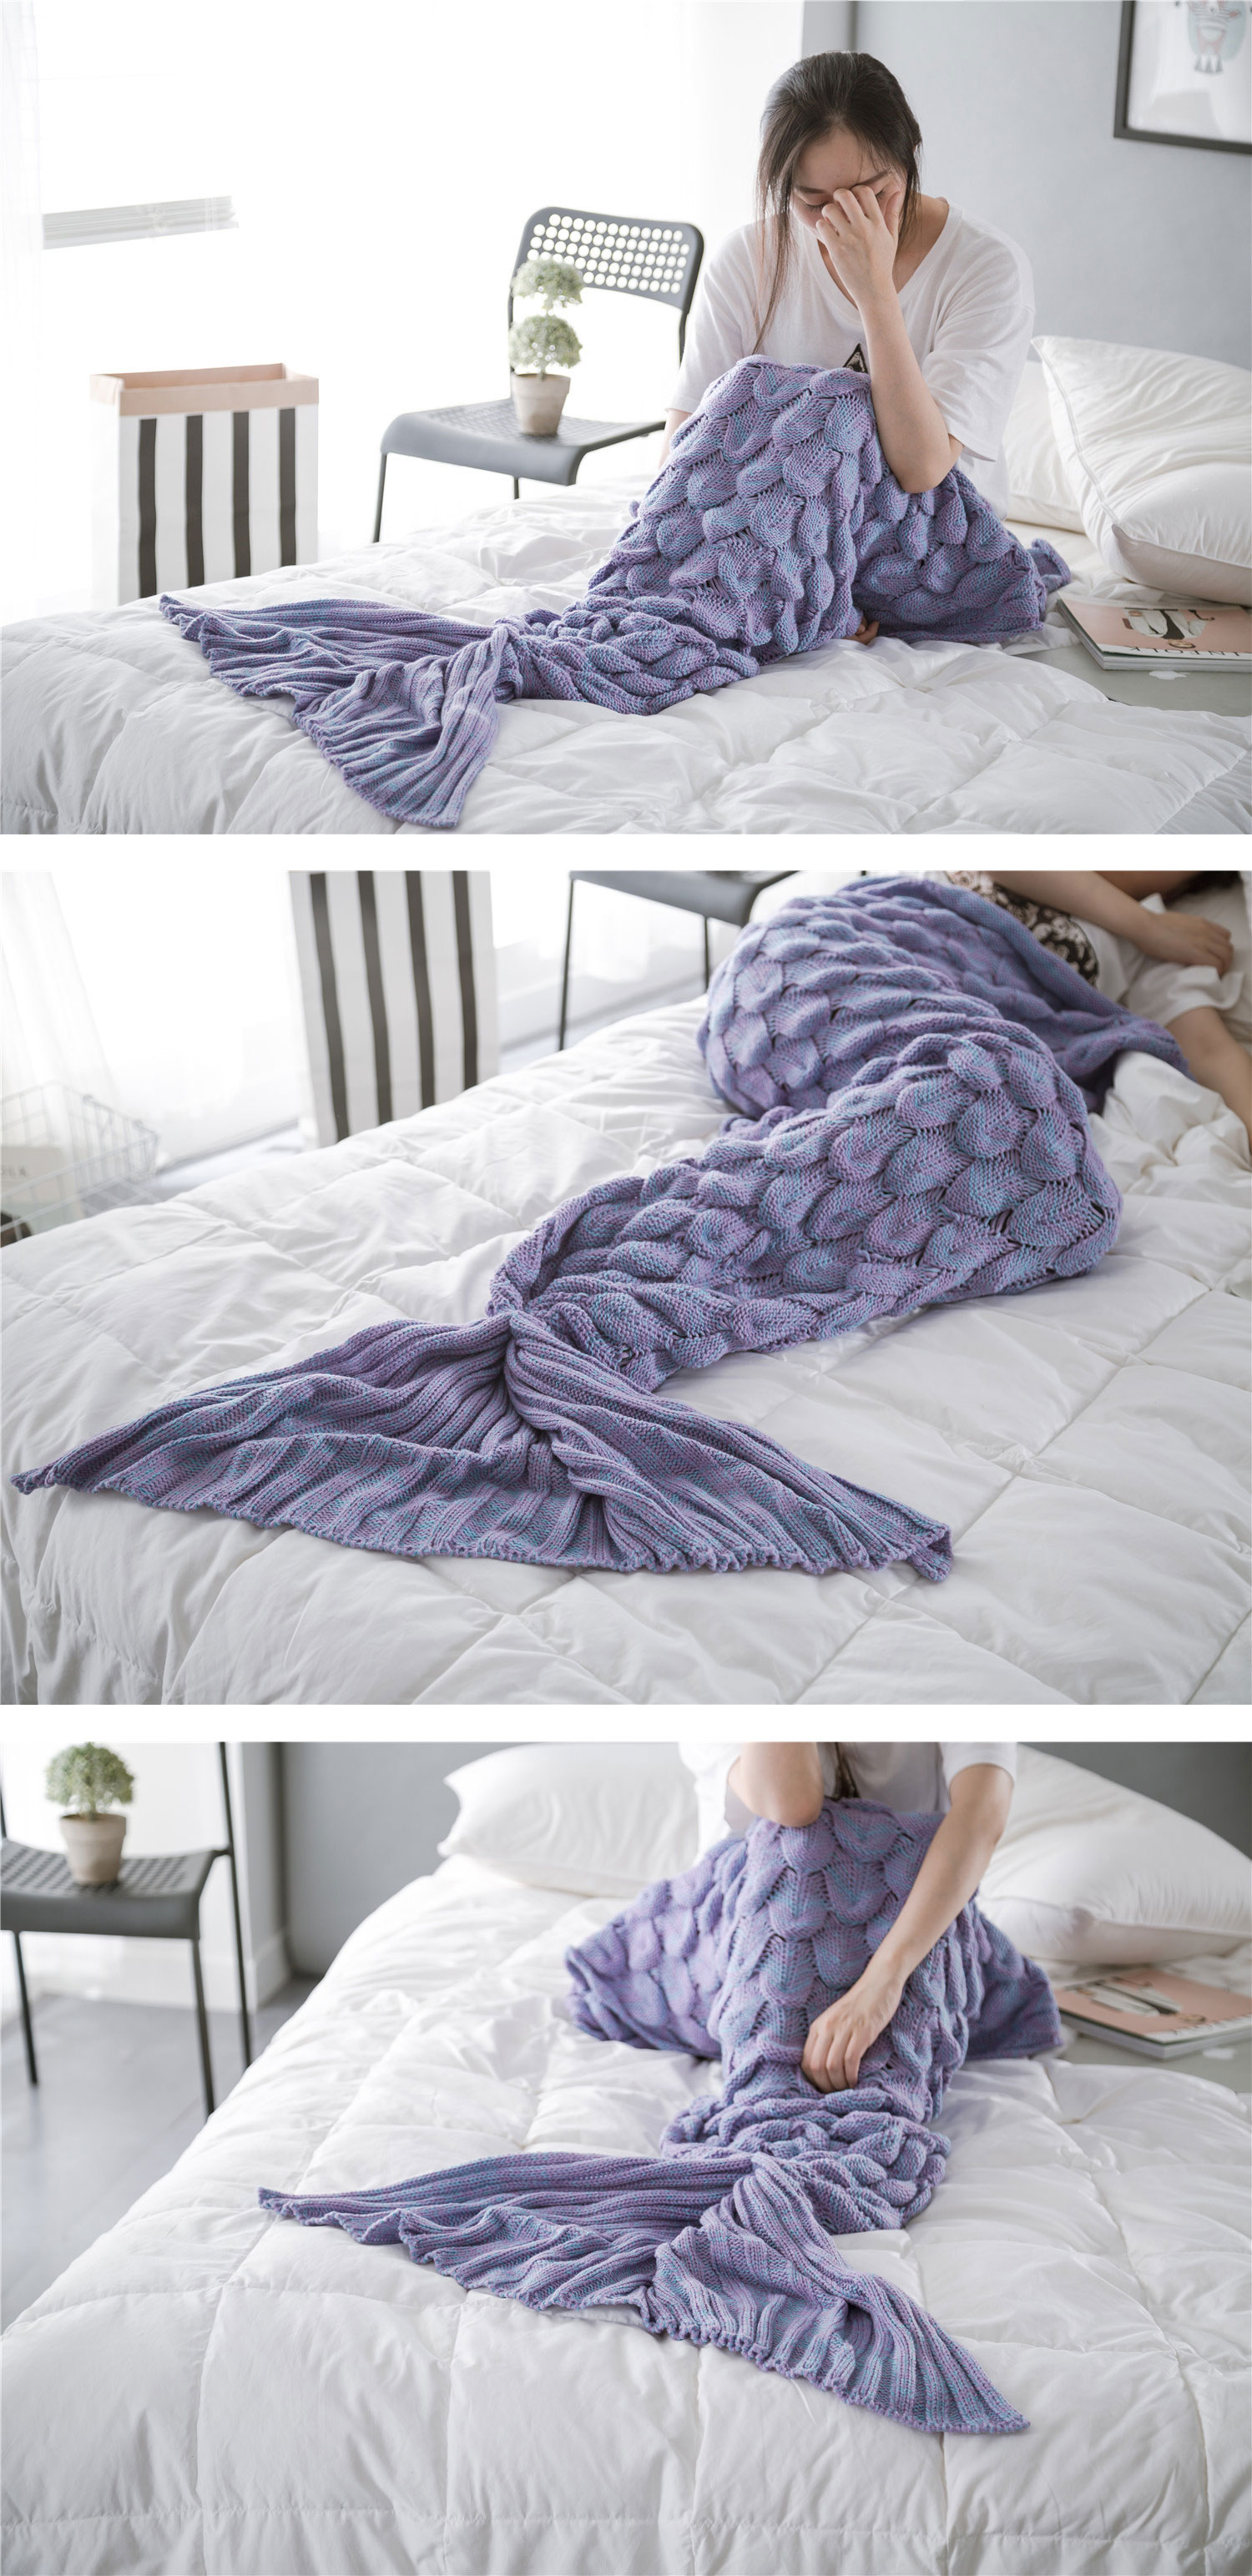 Honana-WX-39-90x190cm-Yarn-Knitting-Mermaid-Tail-Blanket-Fish-Scales-Style-Super-Soft-Sleep-Bag-Bed--1093601-3